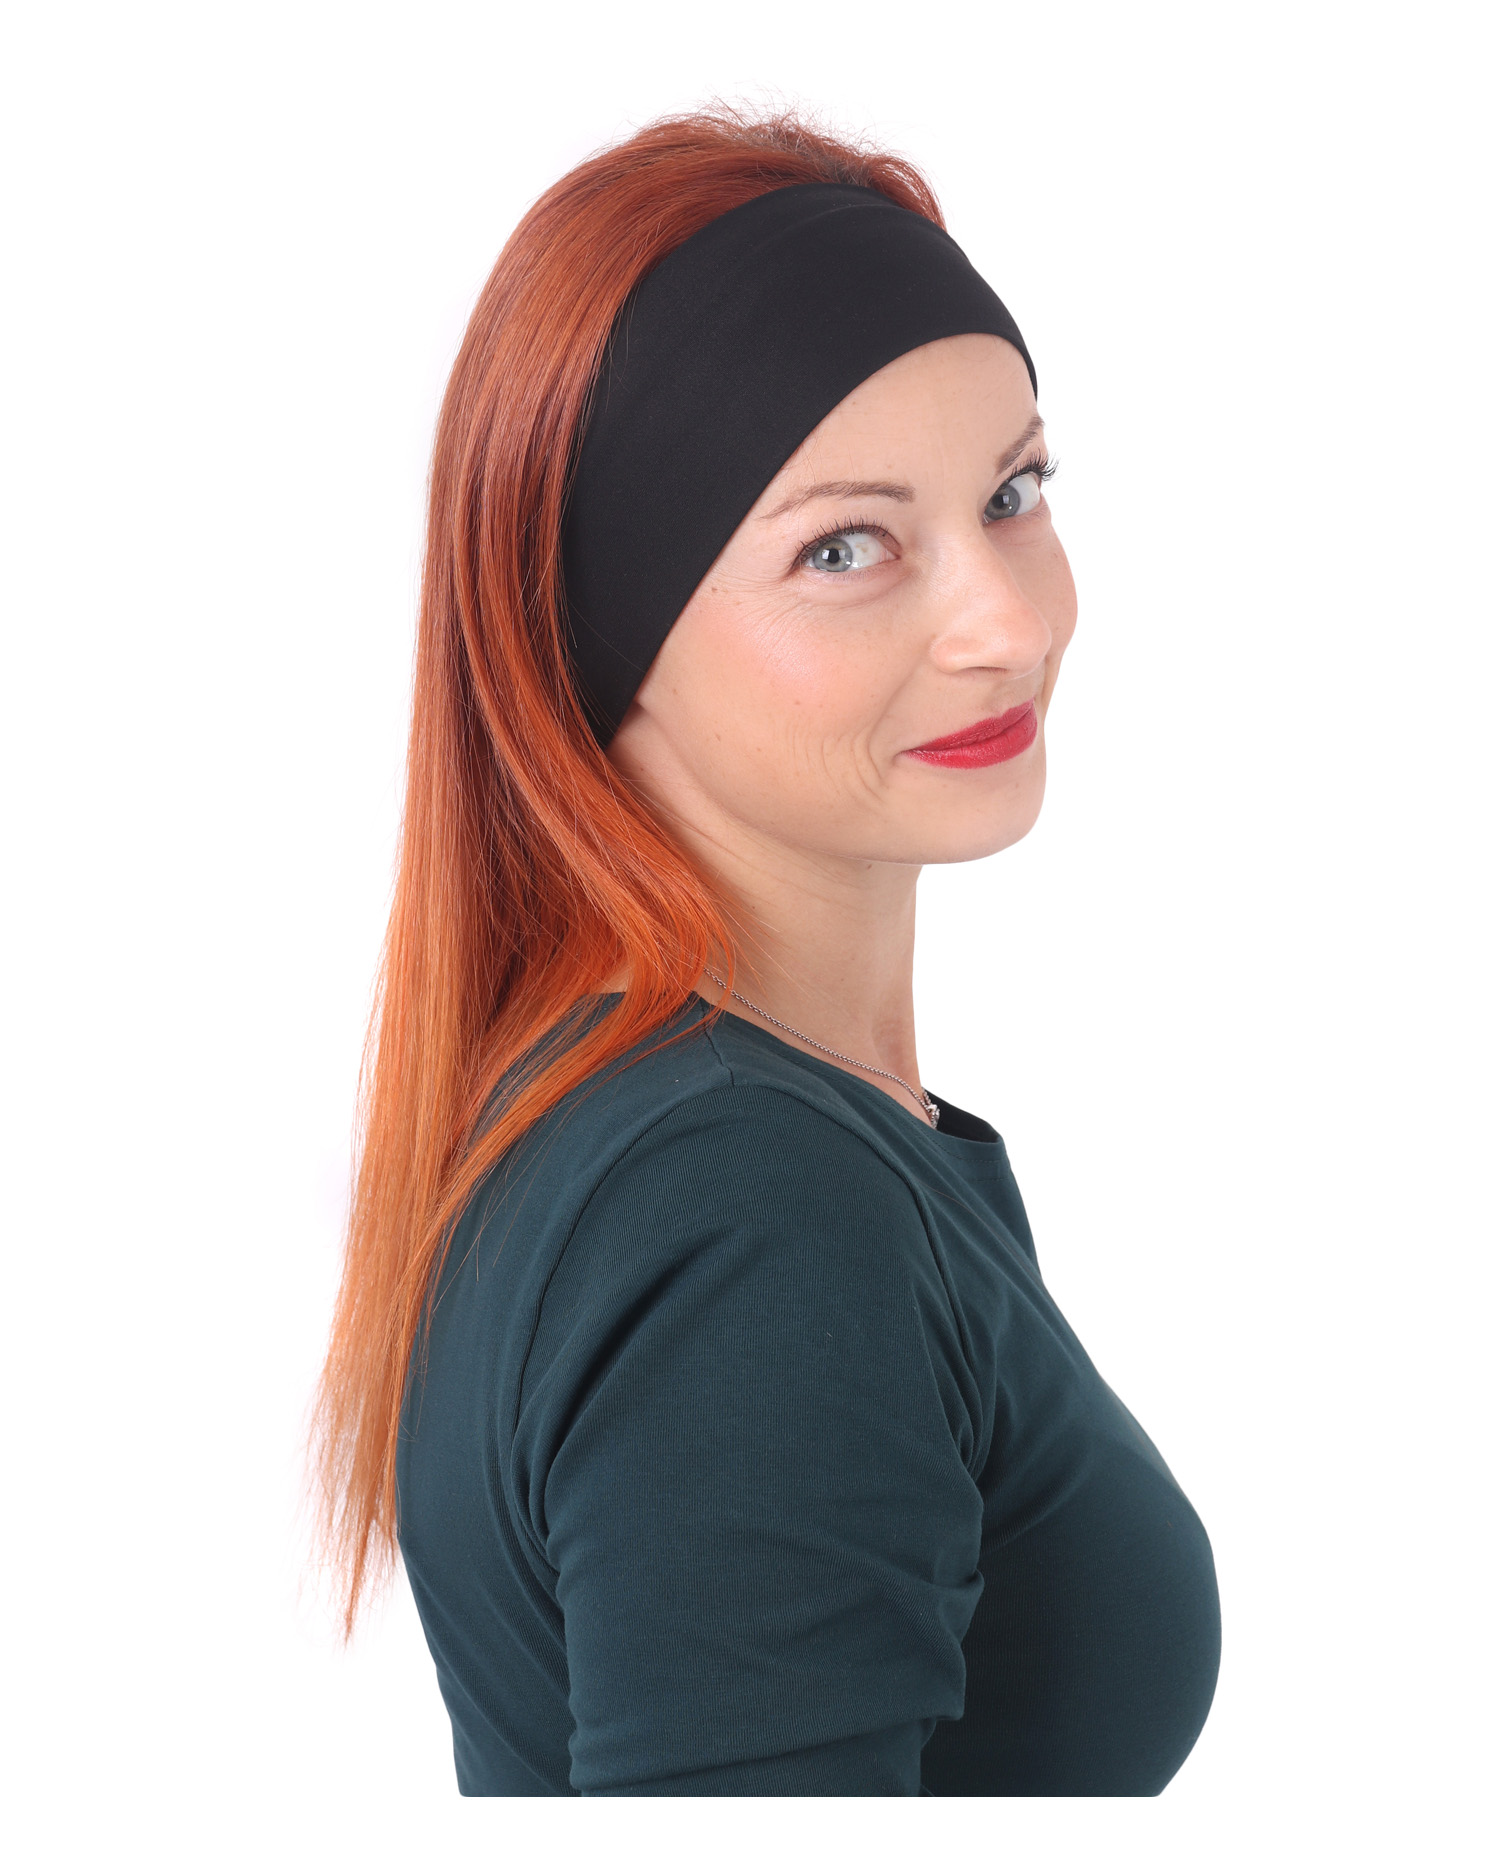 Women's headband